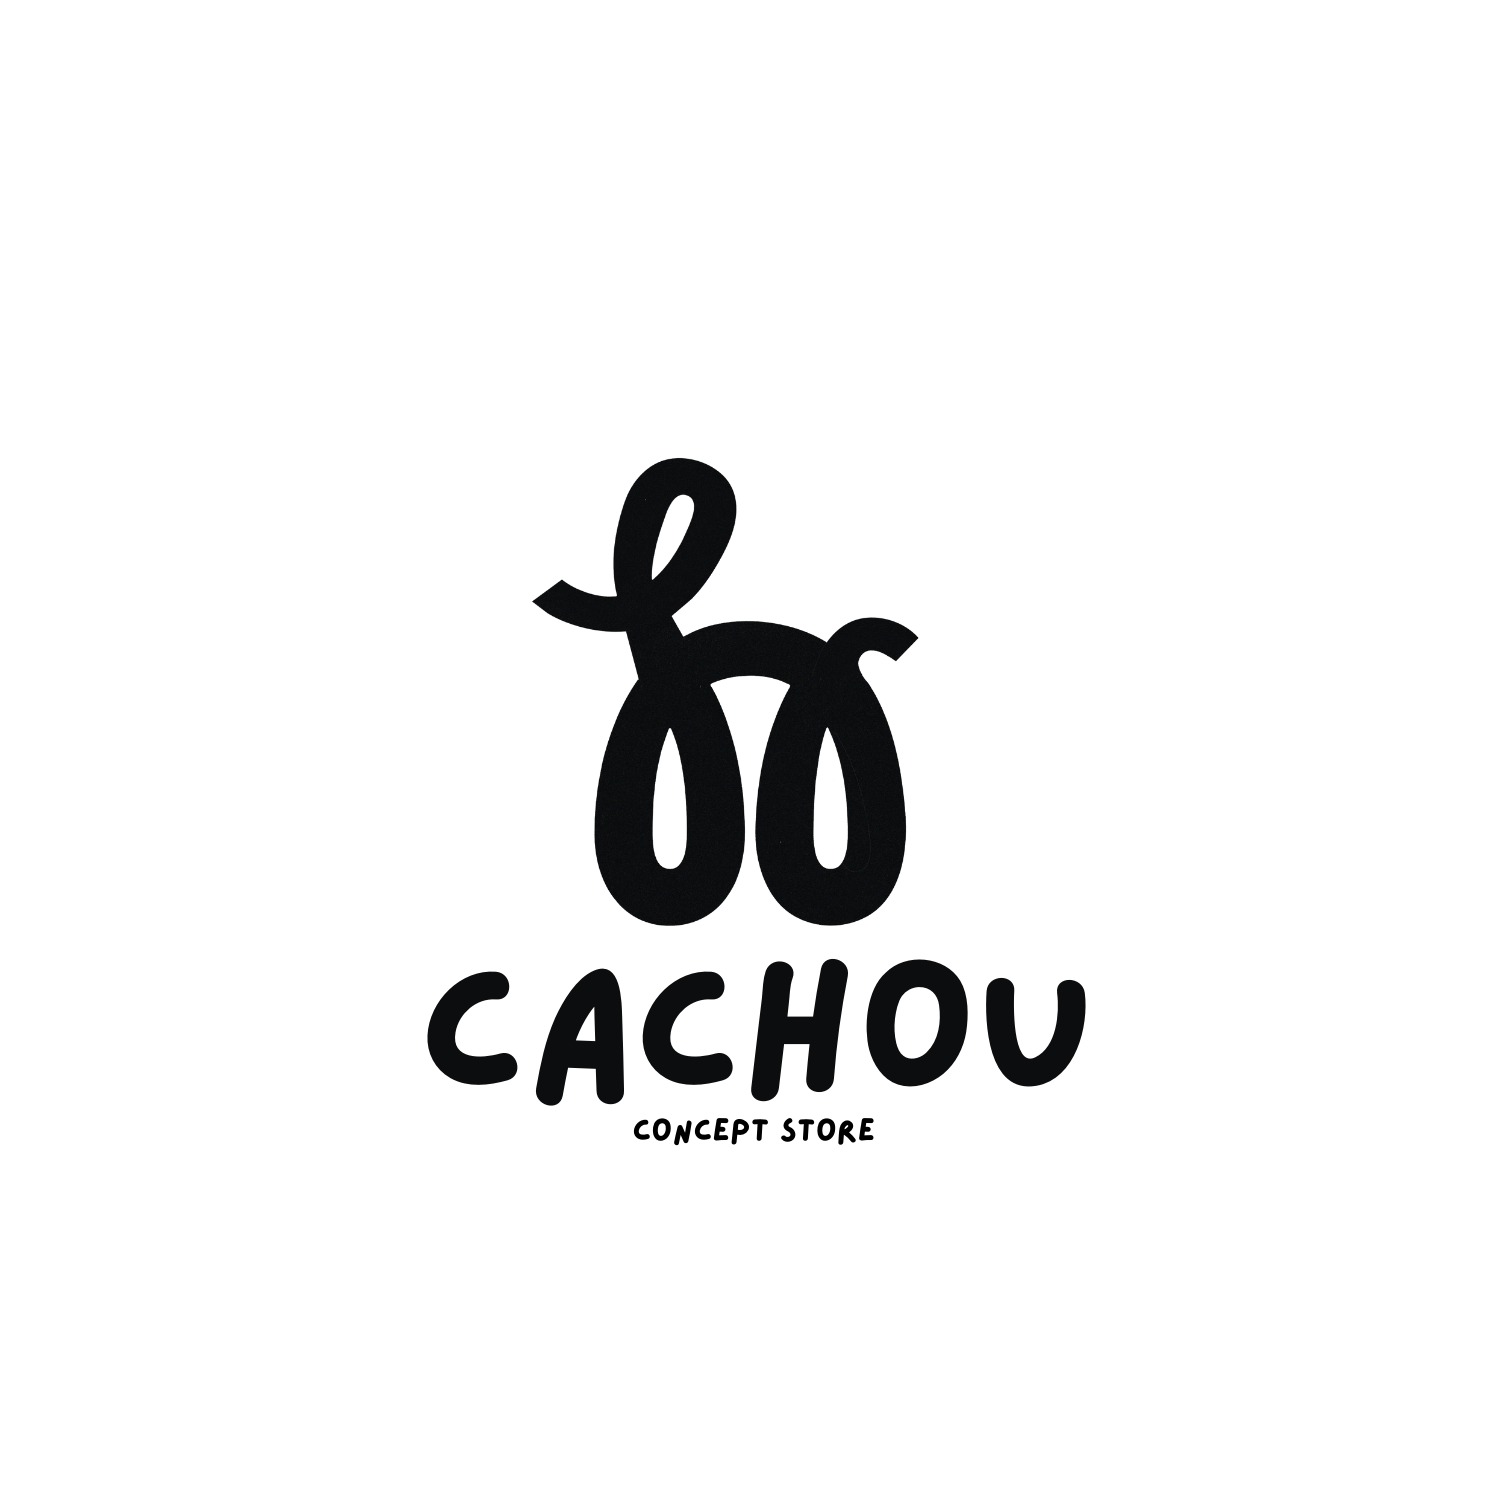 CACHOU CONCEPT STORE